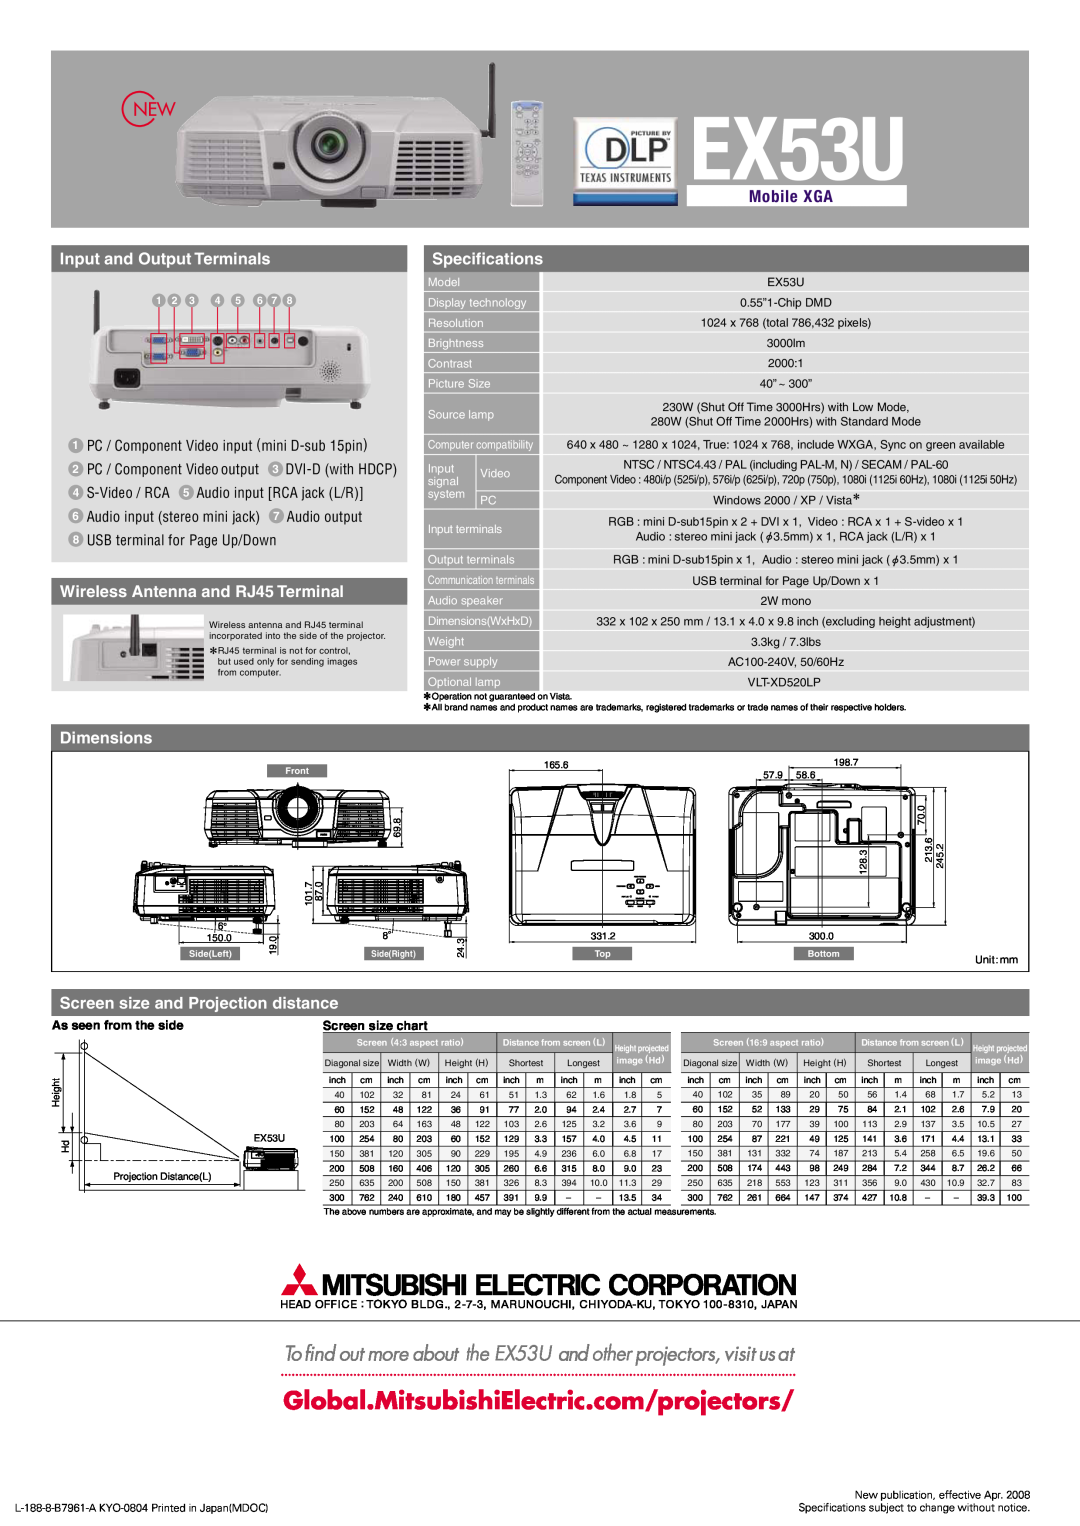 Mitsubishi Electronics the EX53U other, Input and Output Terminals, Wireless Antenna and RJ45 Terminal, Mobile XGA 